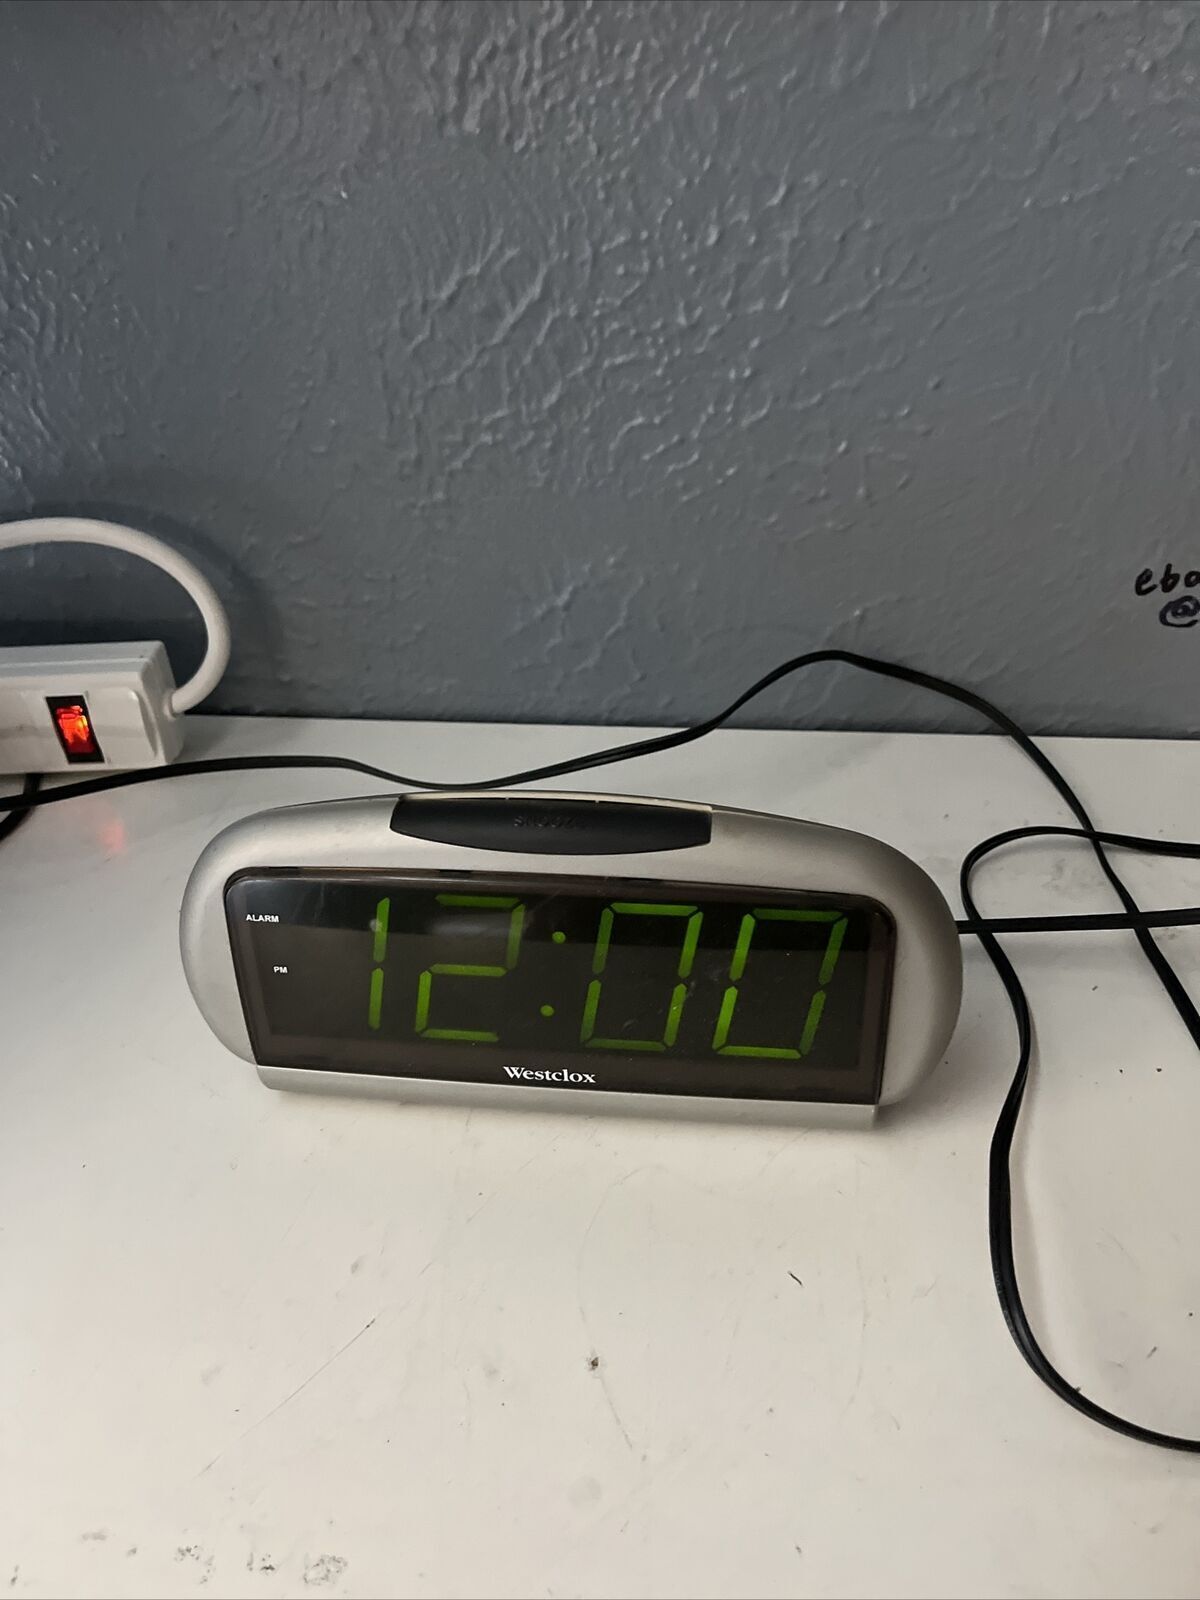 westclox 22724 digital classic alarm clock green lcd alarm clock display